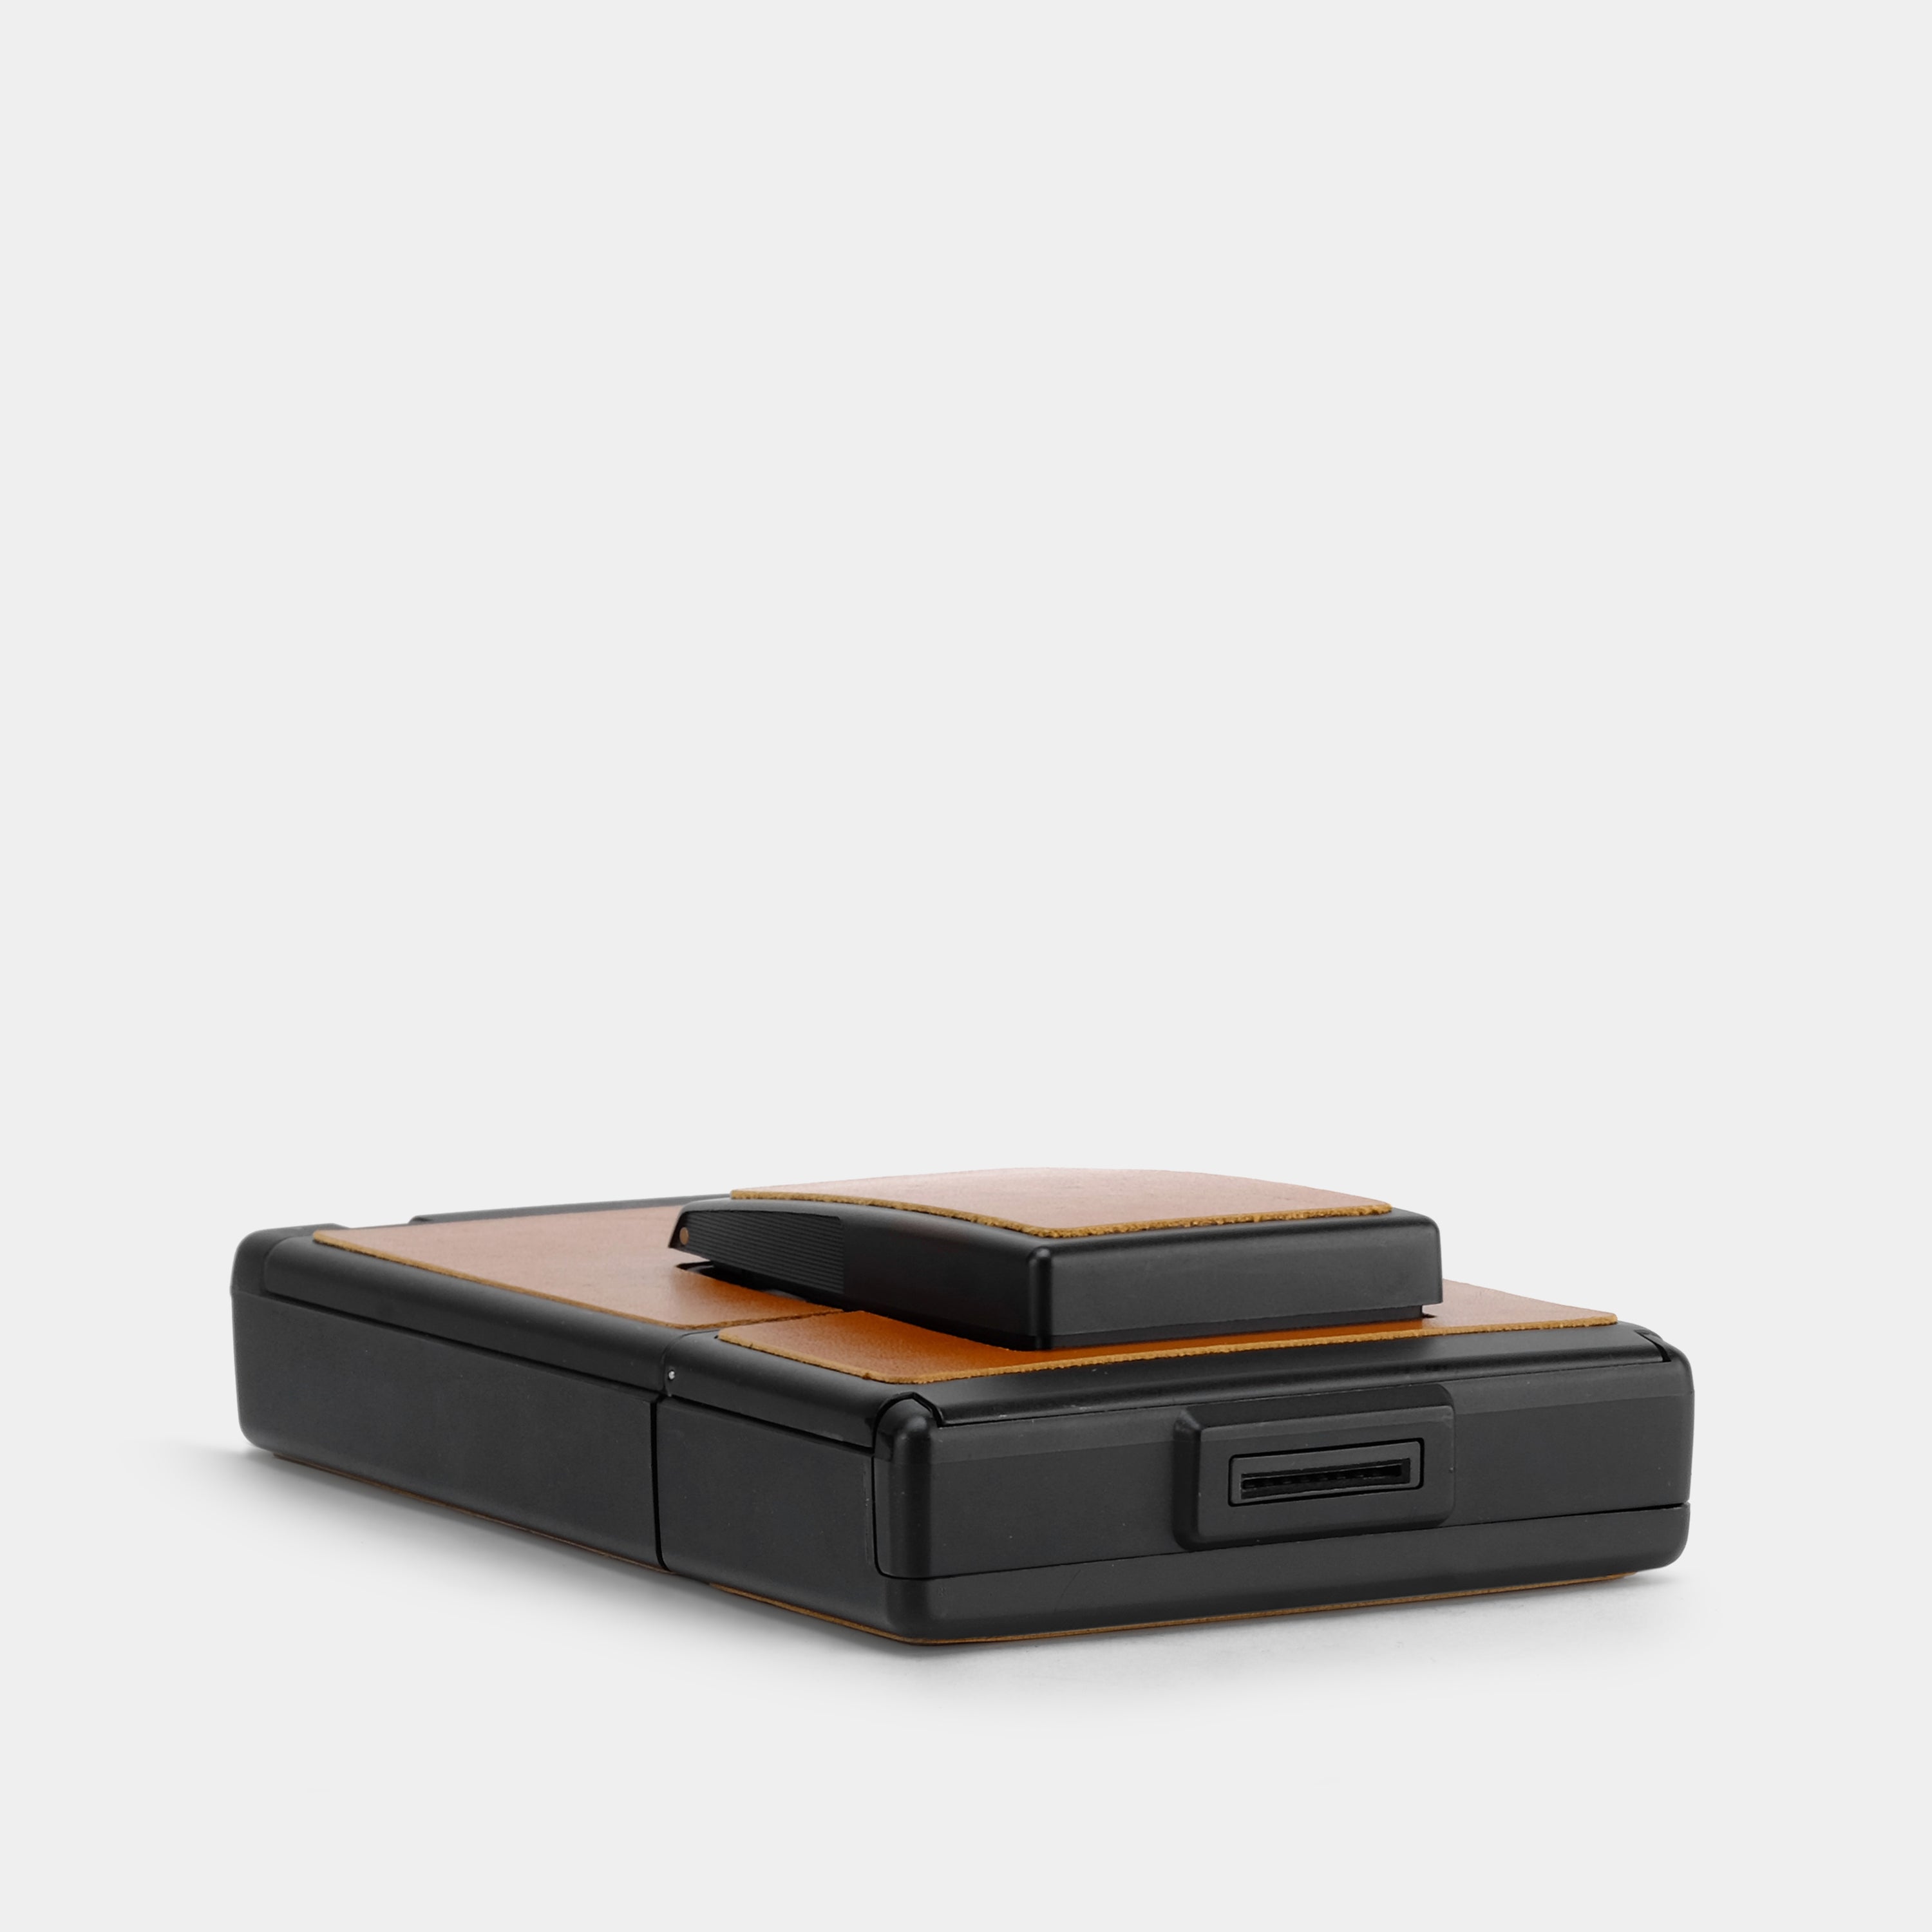 Polaroid SX-70 Alpha Black Folding Instant Film Camera